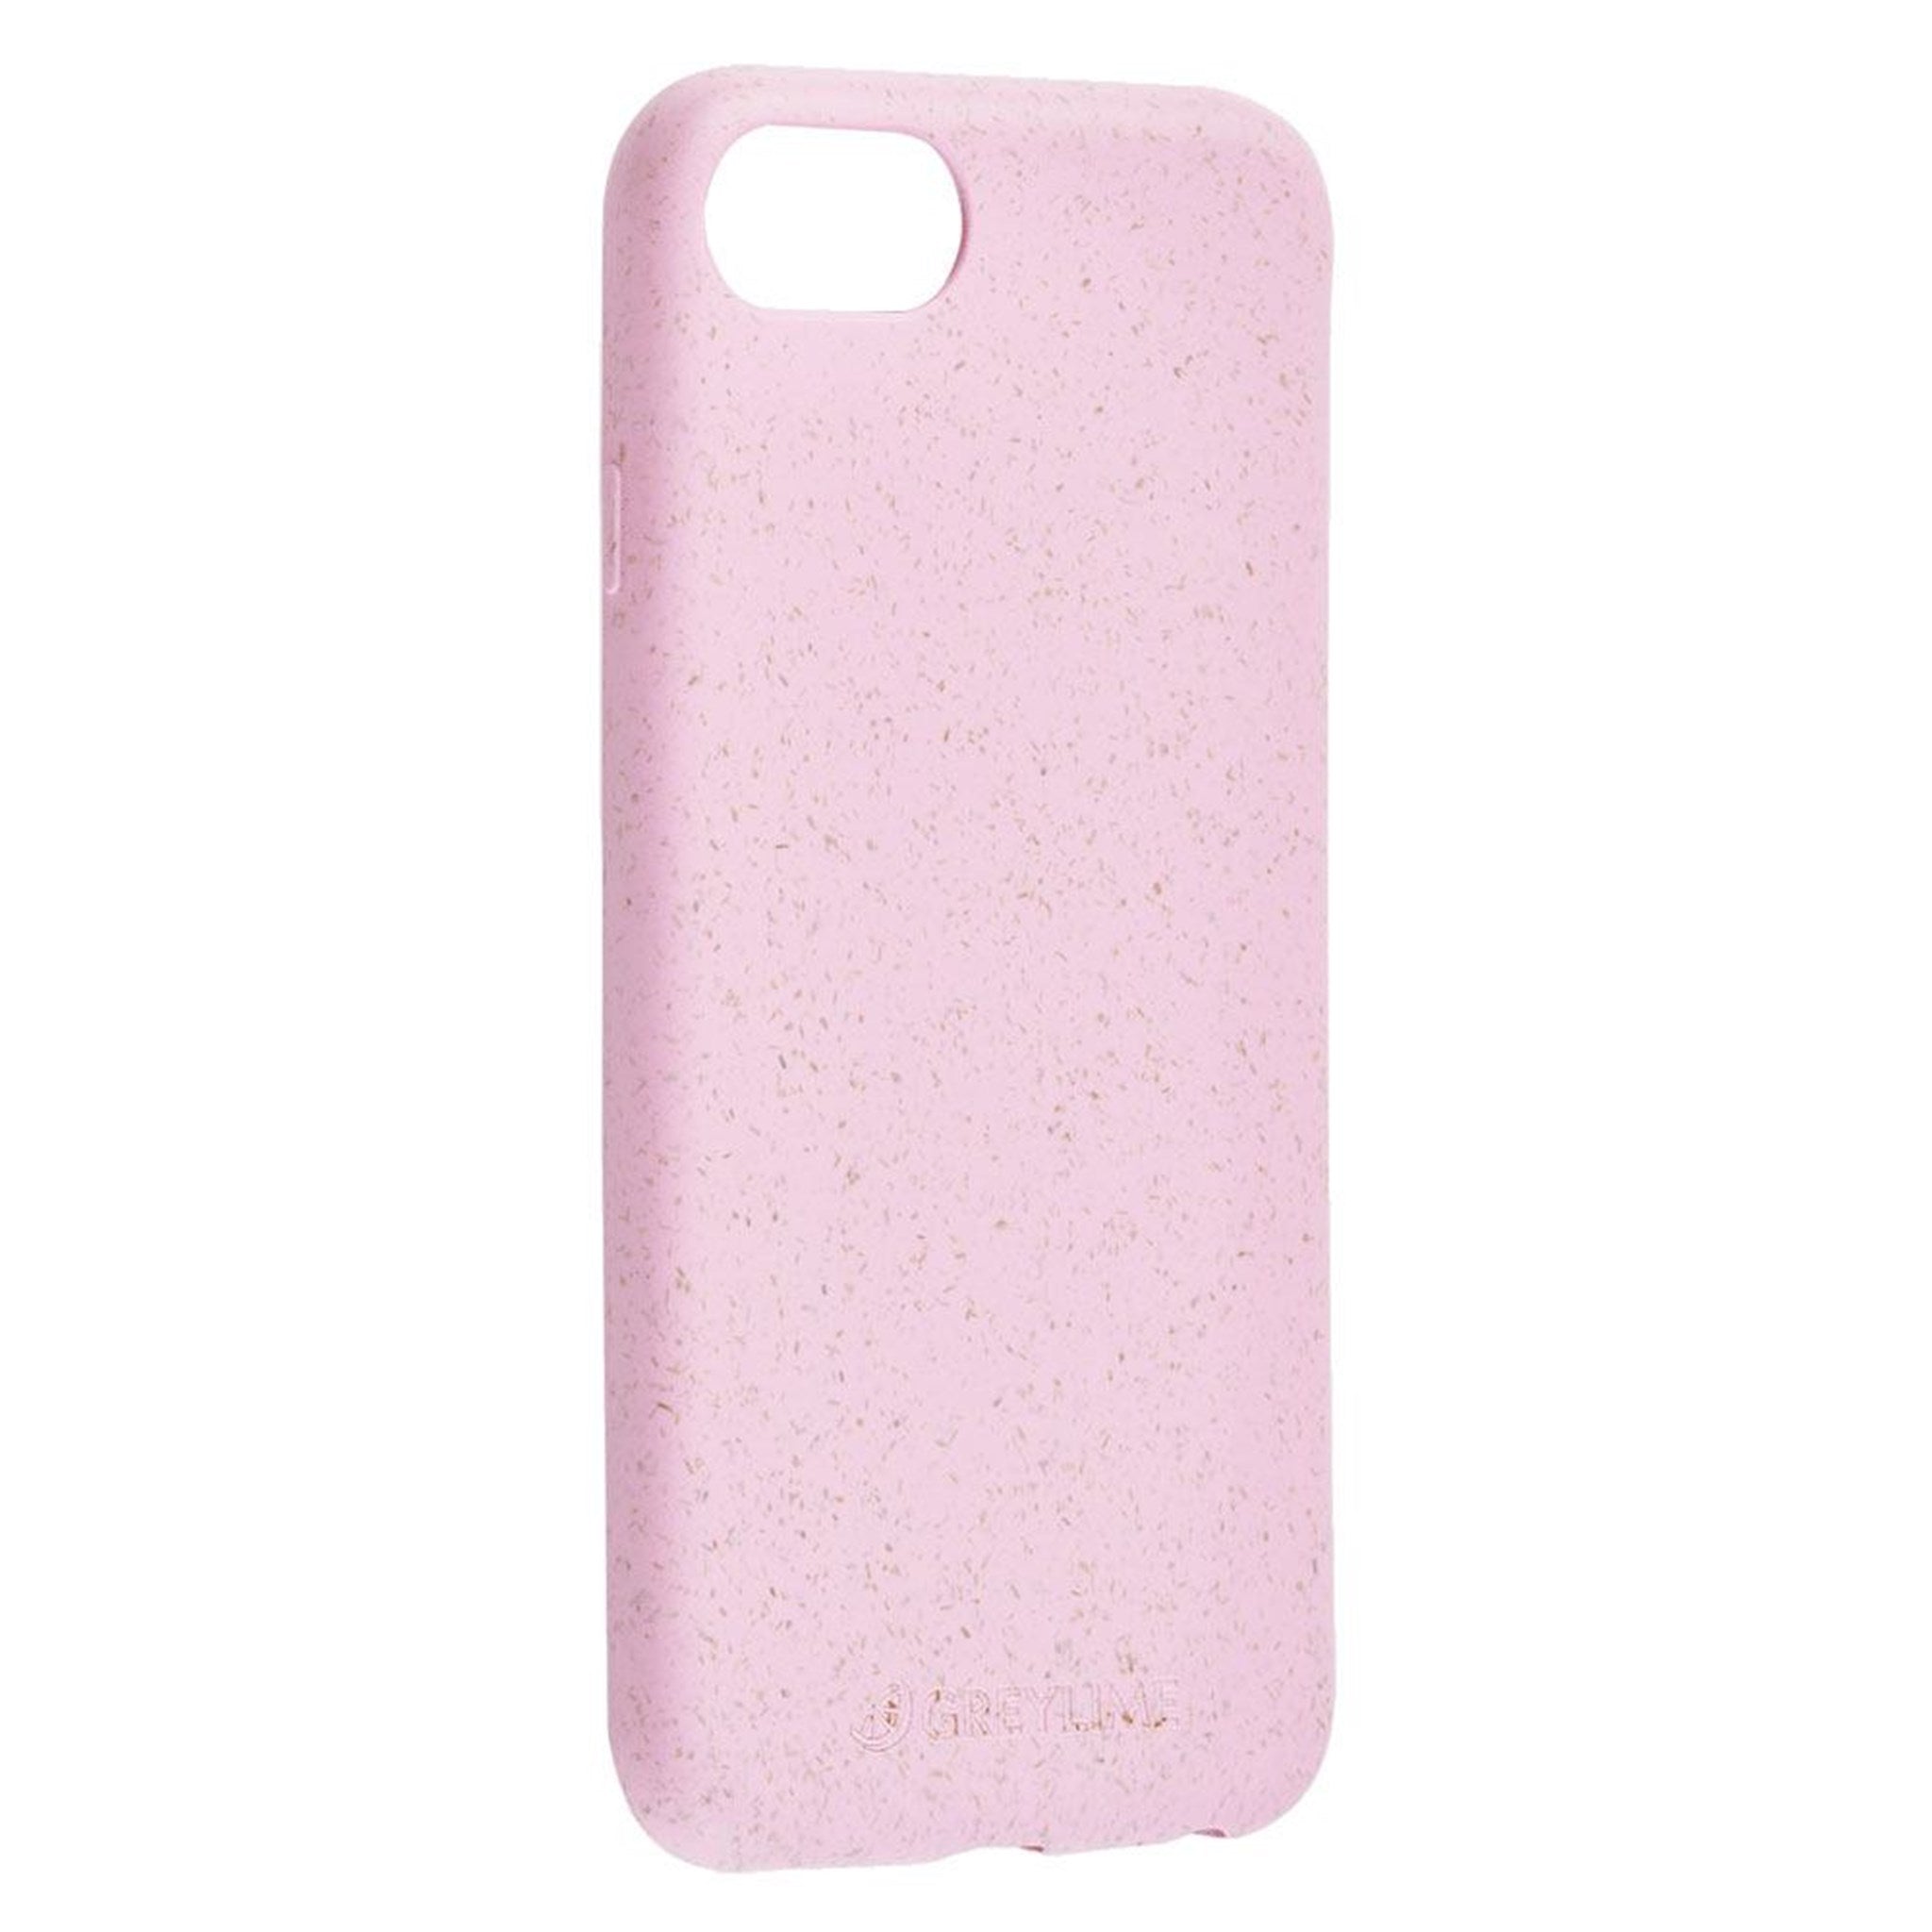 GreyLime-iPhone-6-7-8-SE-biodegradable-cover-Pink-COIP67805-V1.jpg